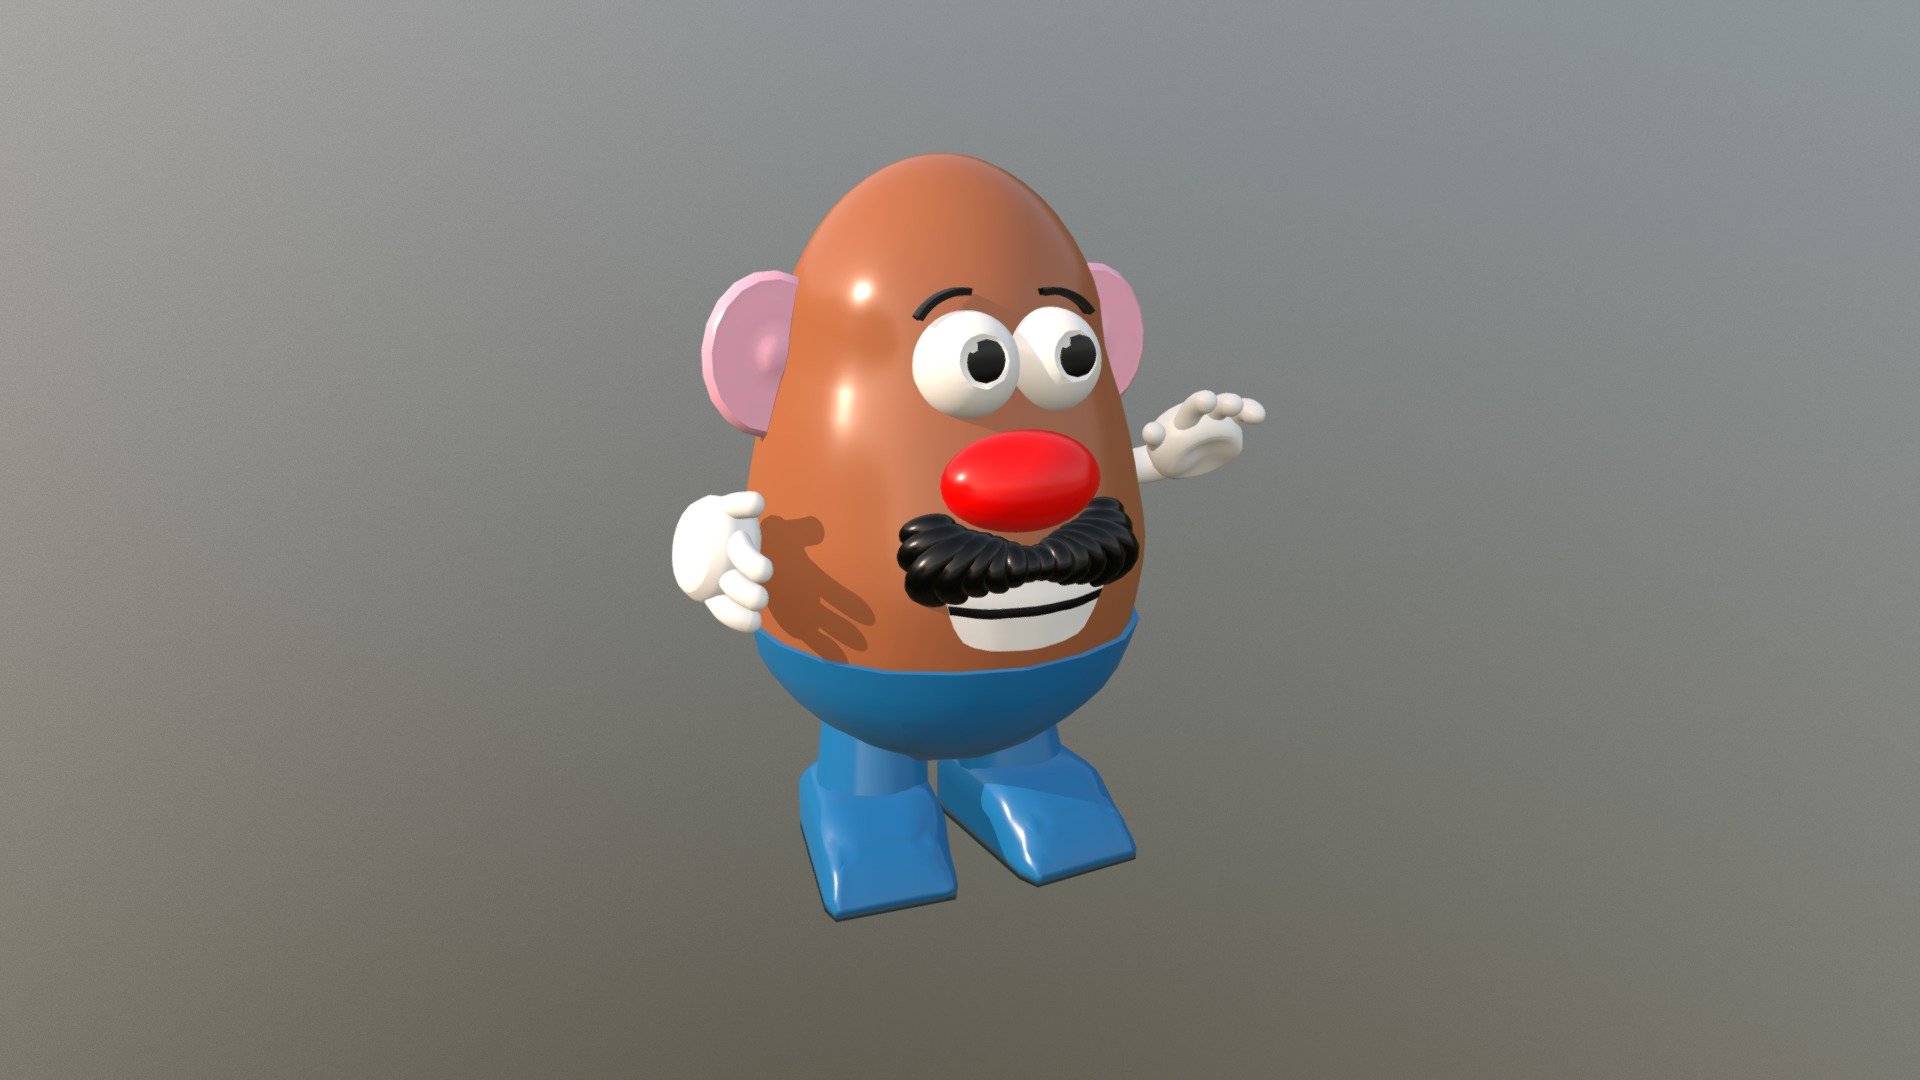 Mr. Potato Head model by Justin [1c1183b]